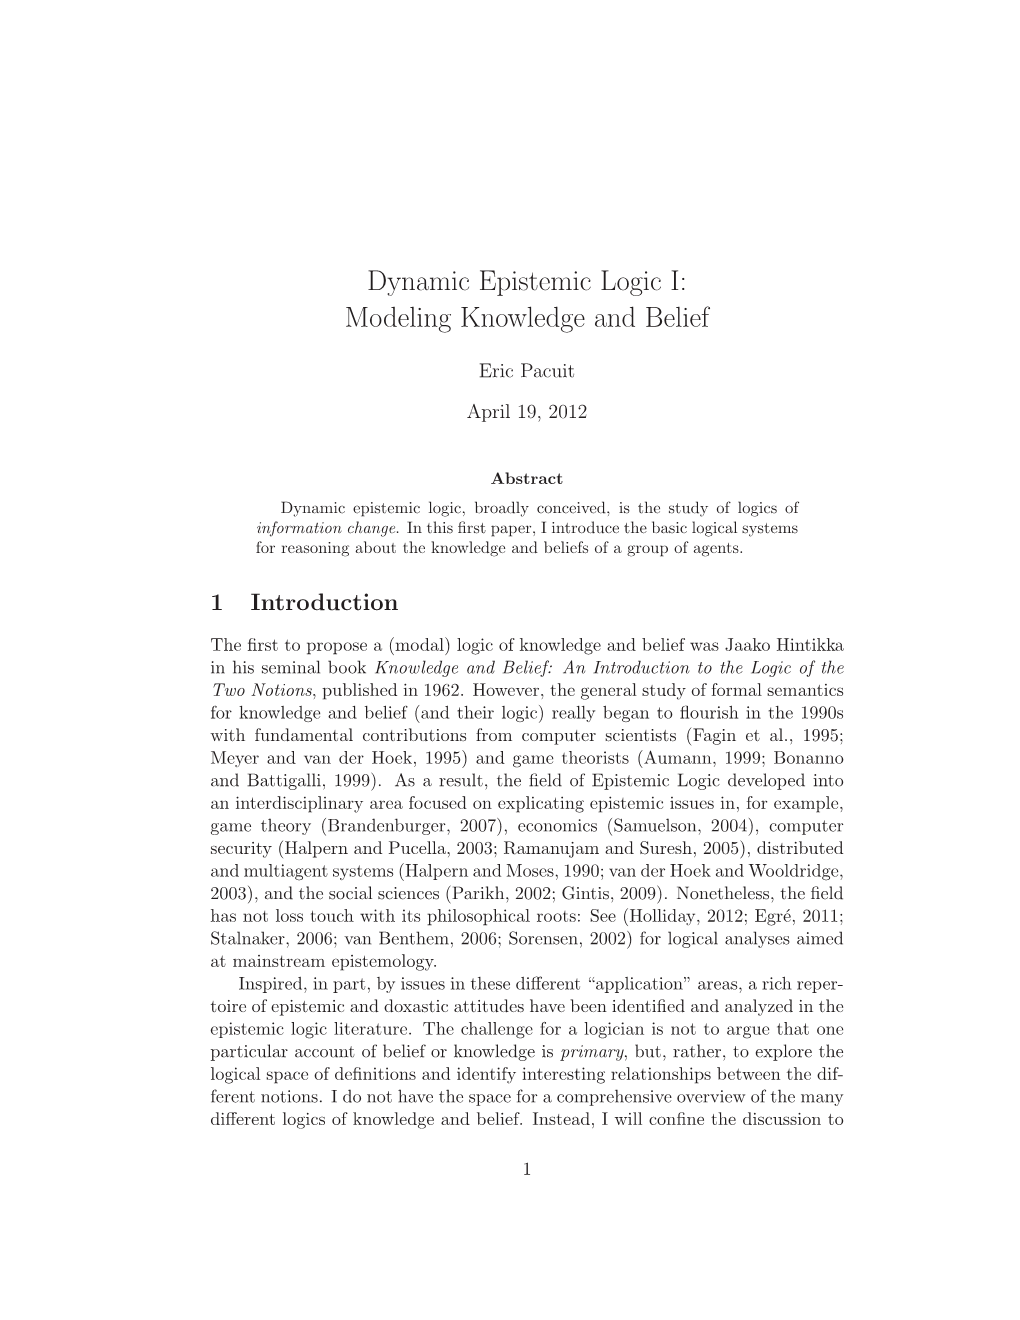 Dynamic Epistemic Logic I: Modeling Knowledge and Belief